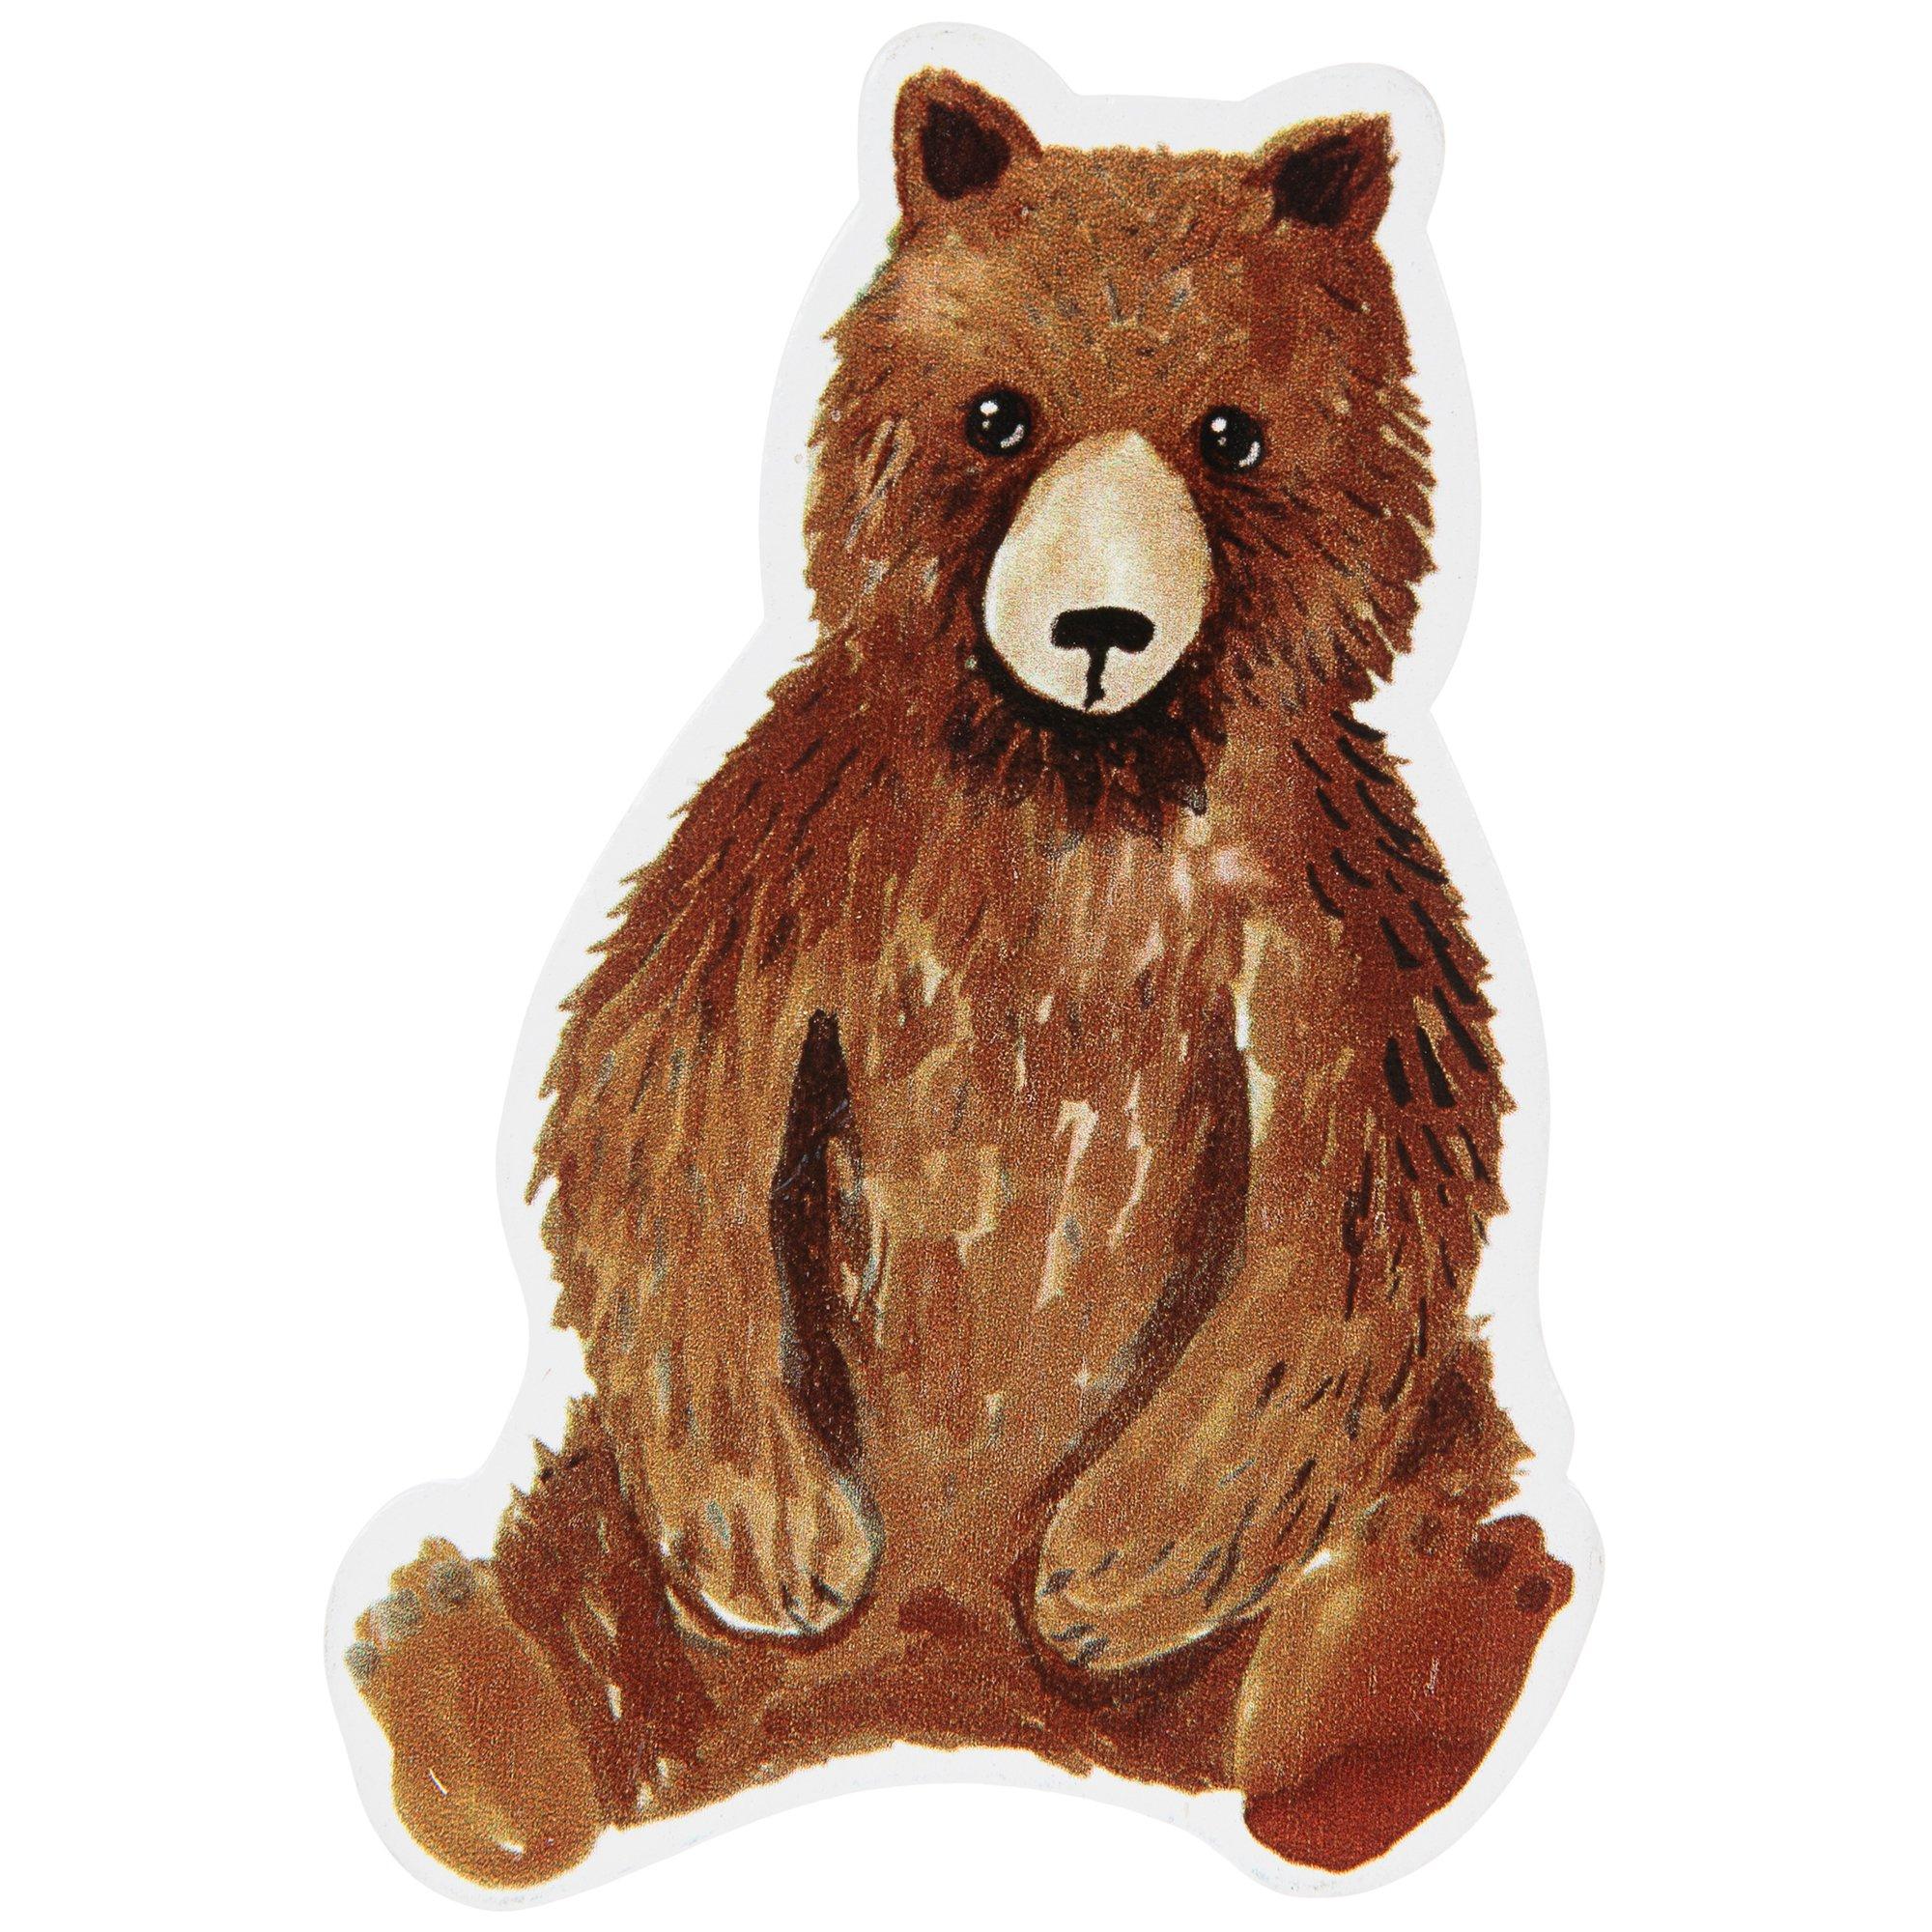 Wooden Bear Craft Shapes